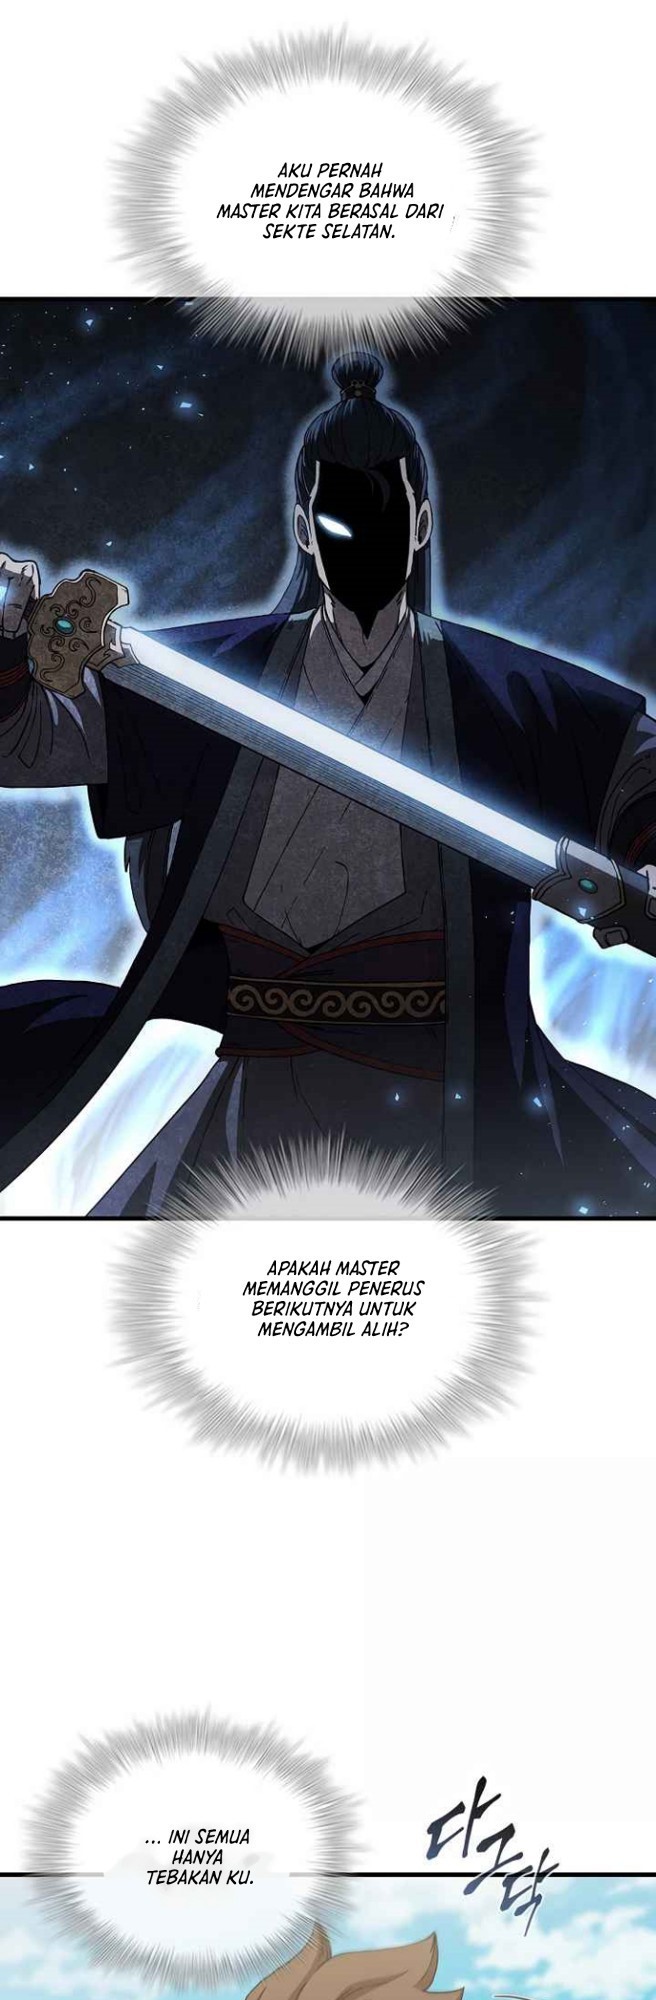 Sinsu Jeil Sword Chapter 52 - 297